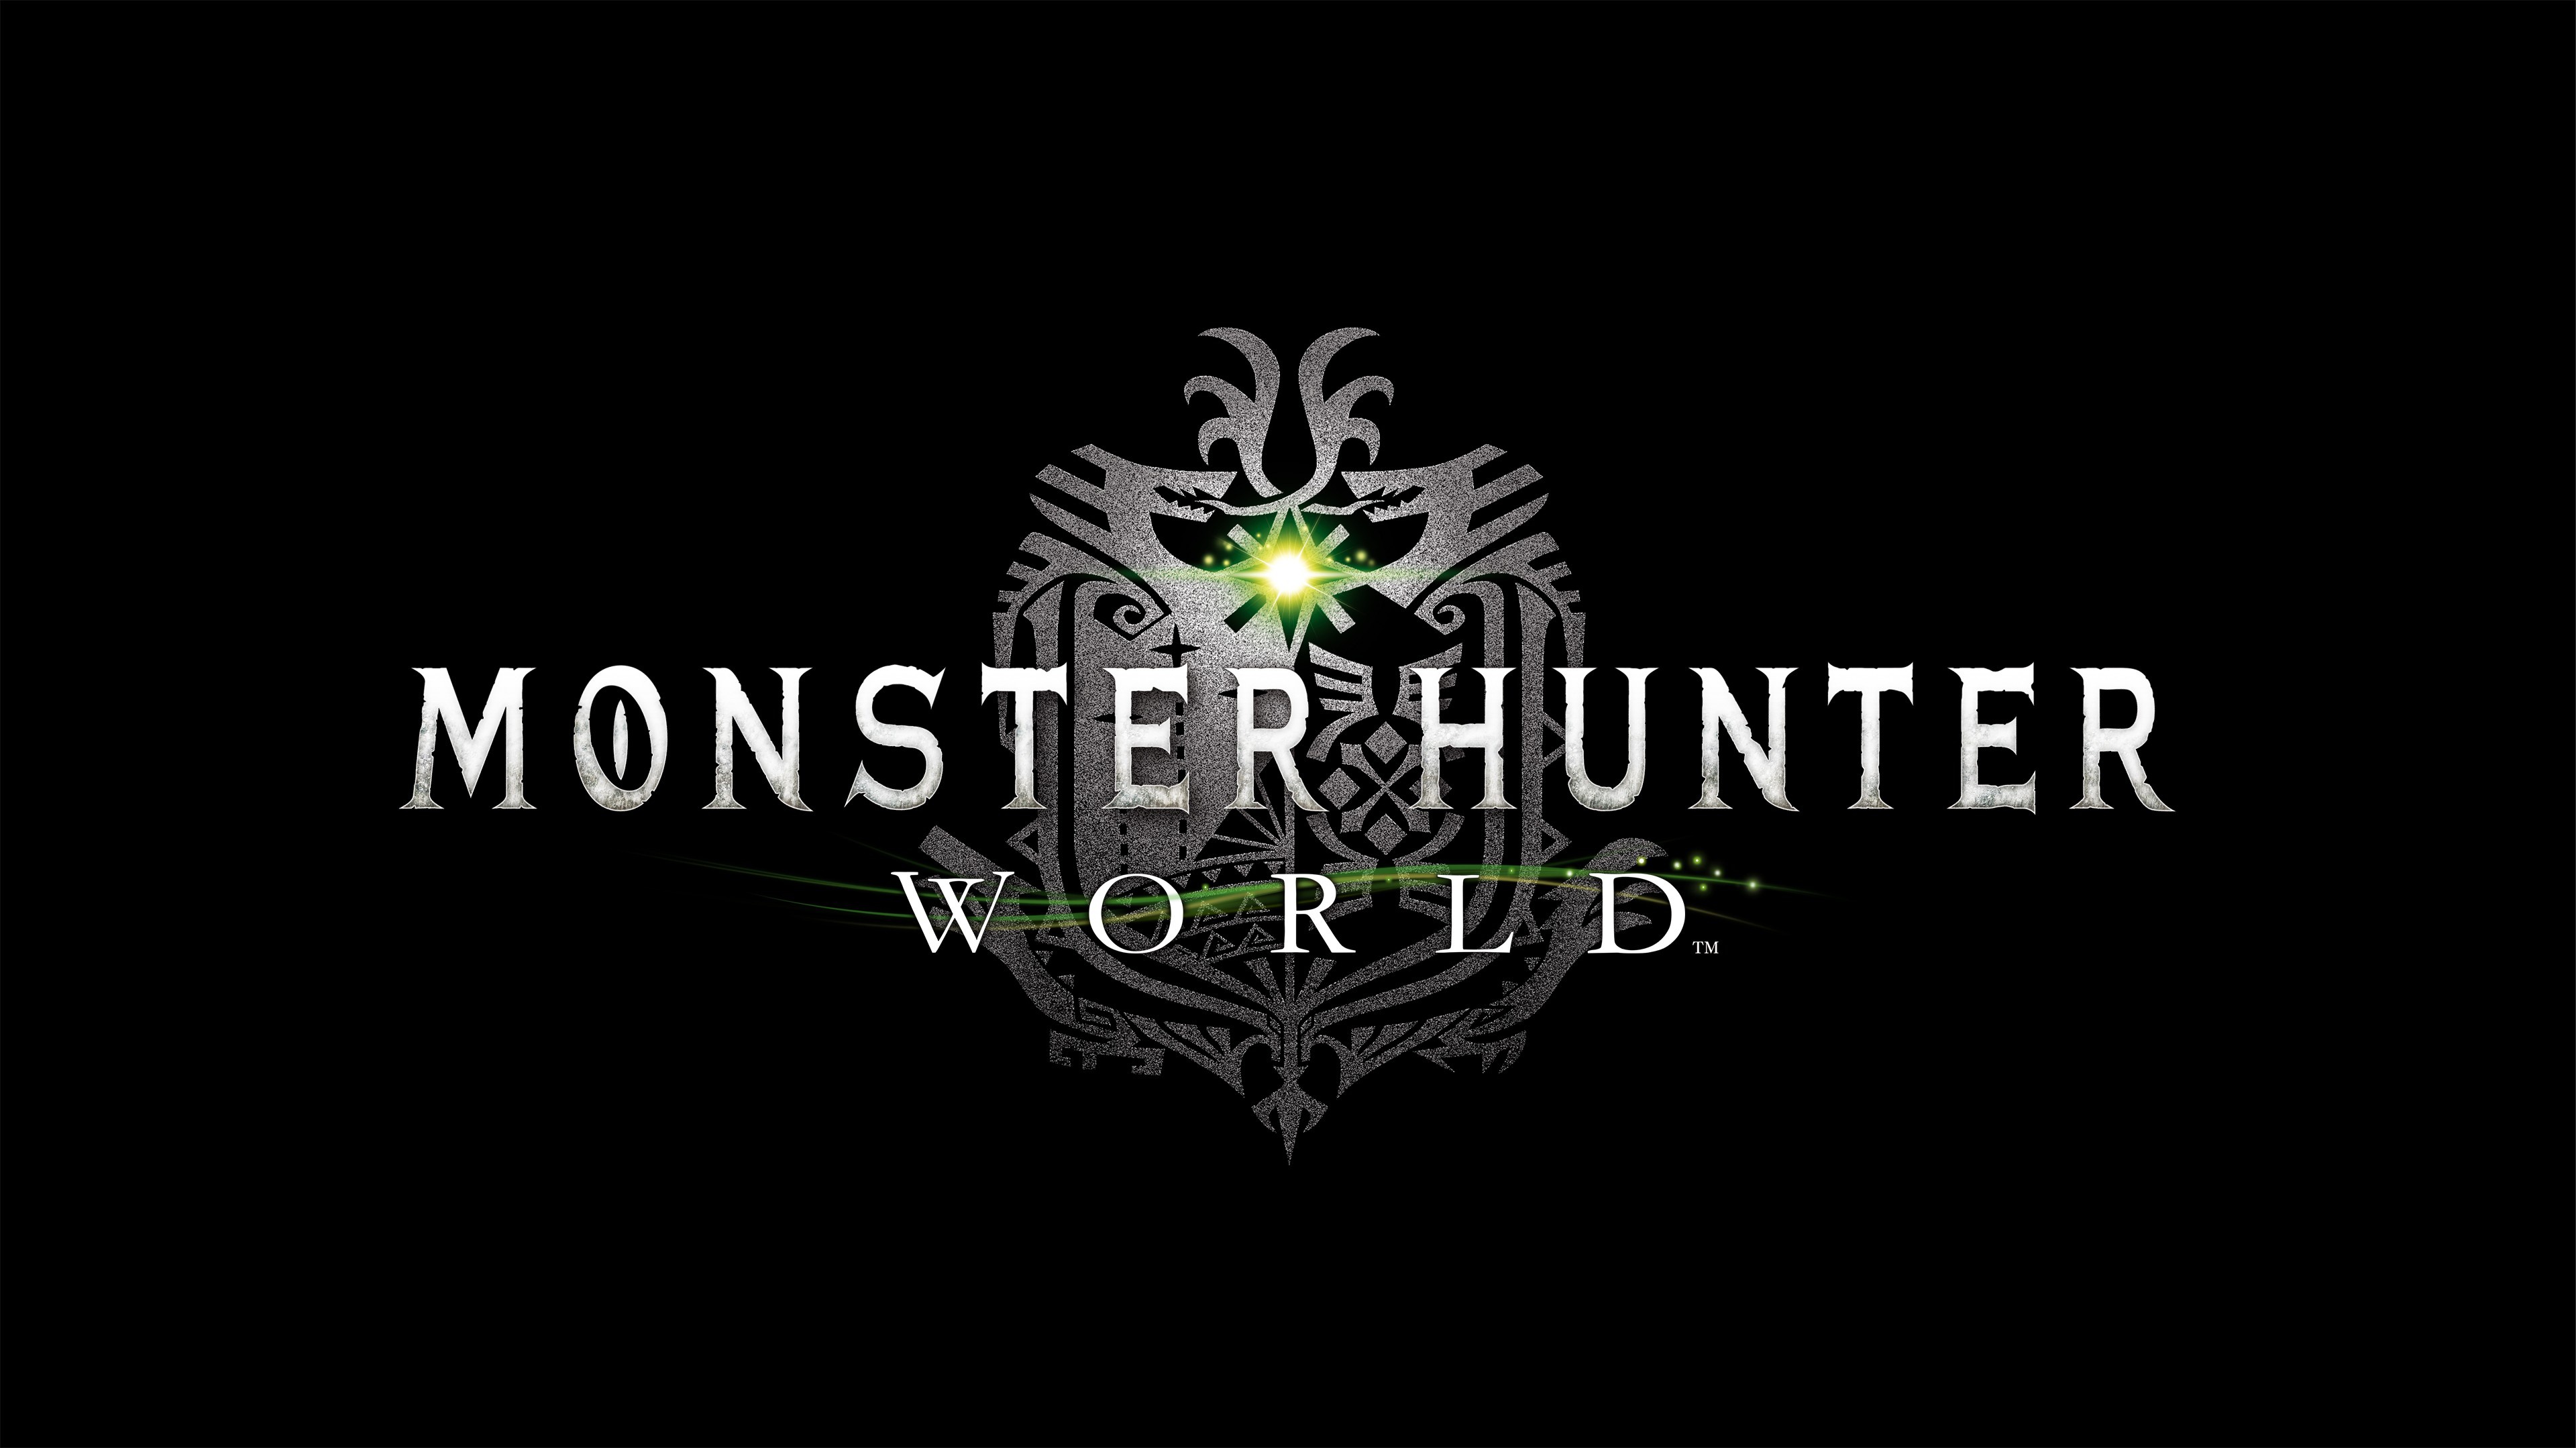 879046 descargar imagen monster hunter: world, videojuego: fondos de pantalla y protectores de pantalla gratis